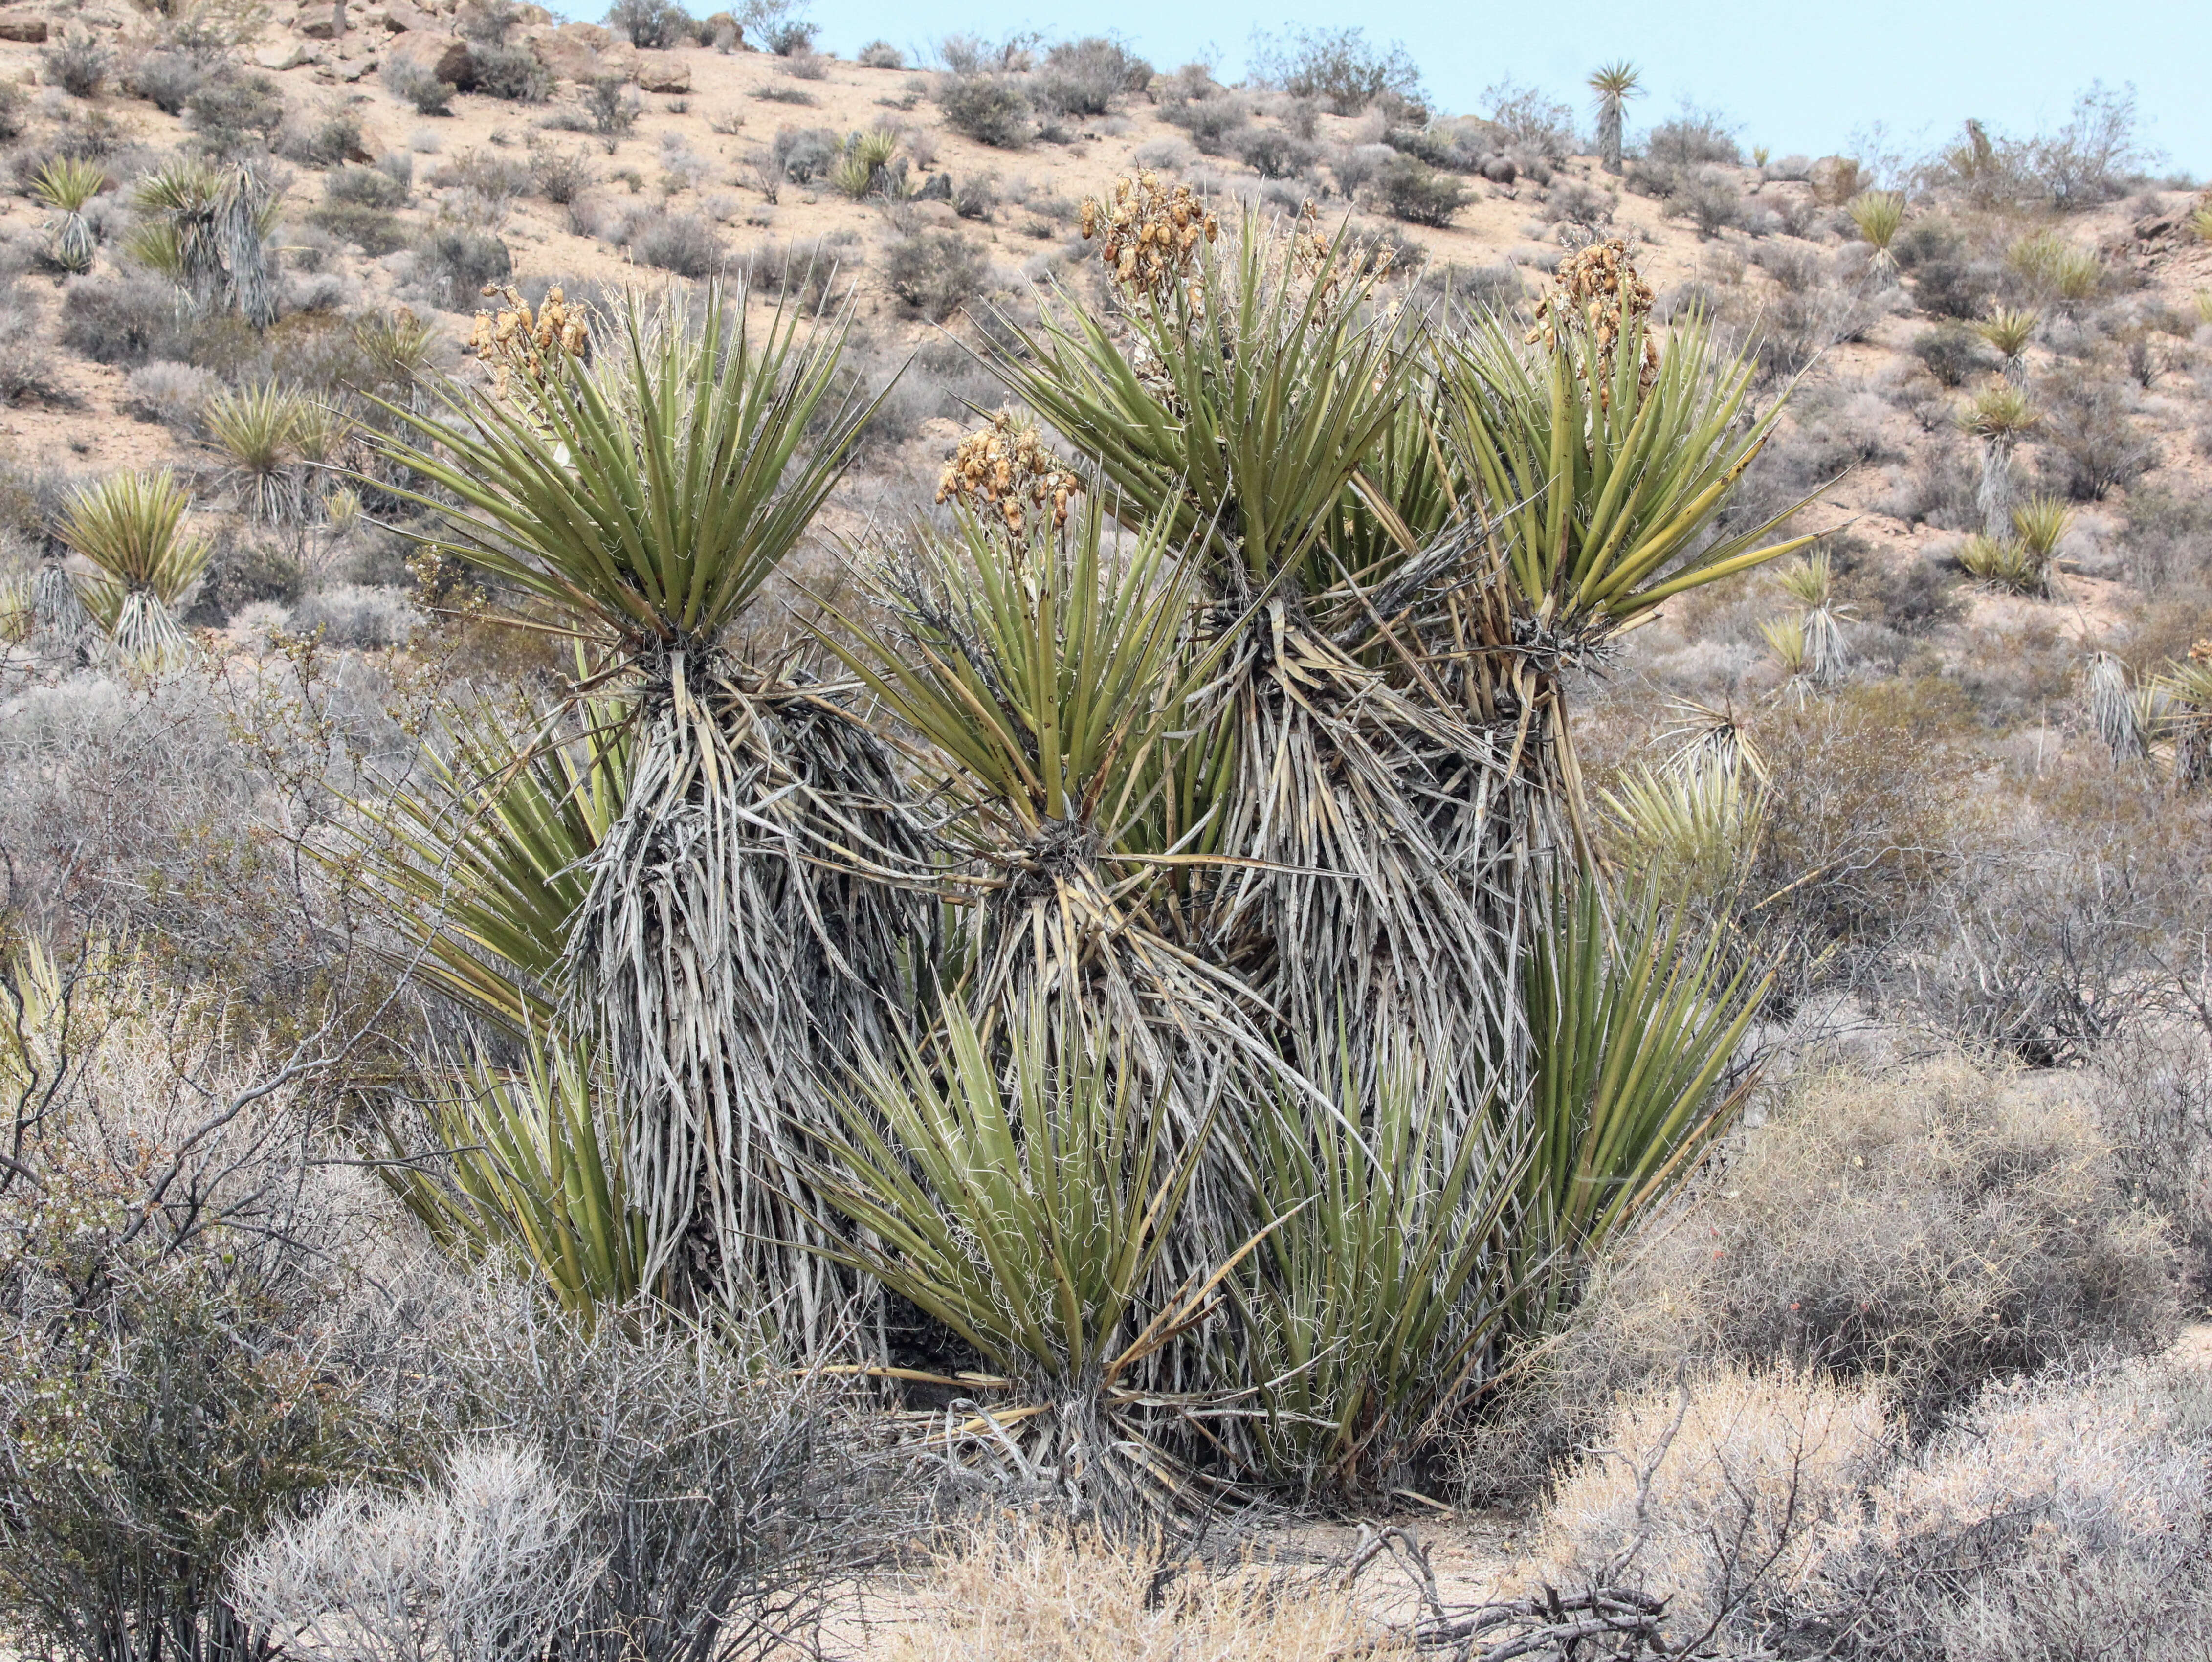 Yucca resmi